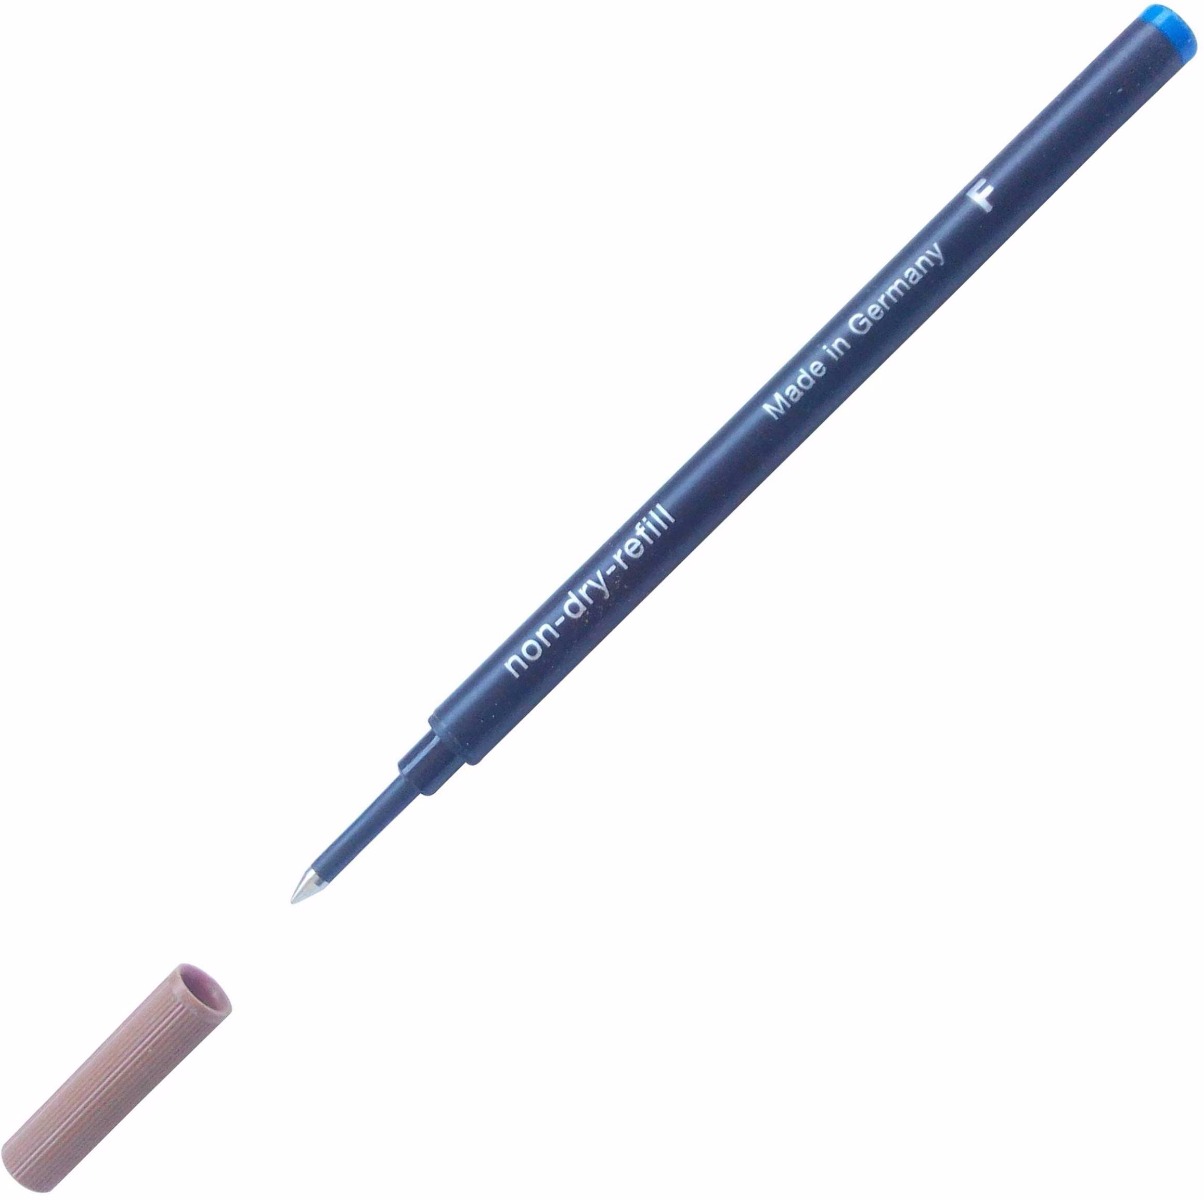 SCHMIDT 888 F PLASTIC BLUE COLOR – ROLLER BALL REFILL MODEL: 11127